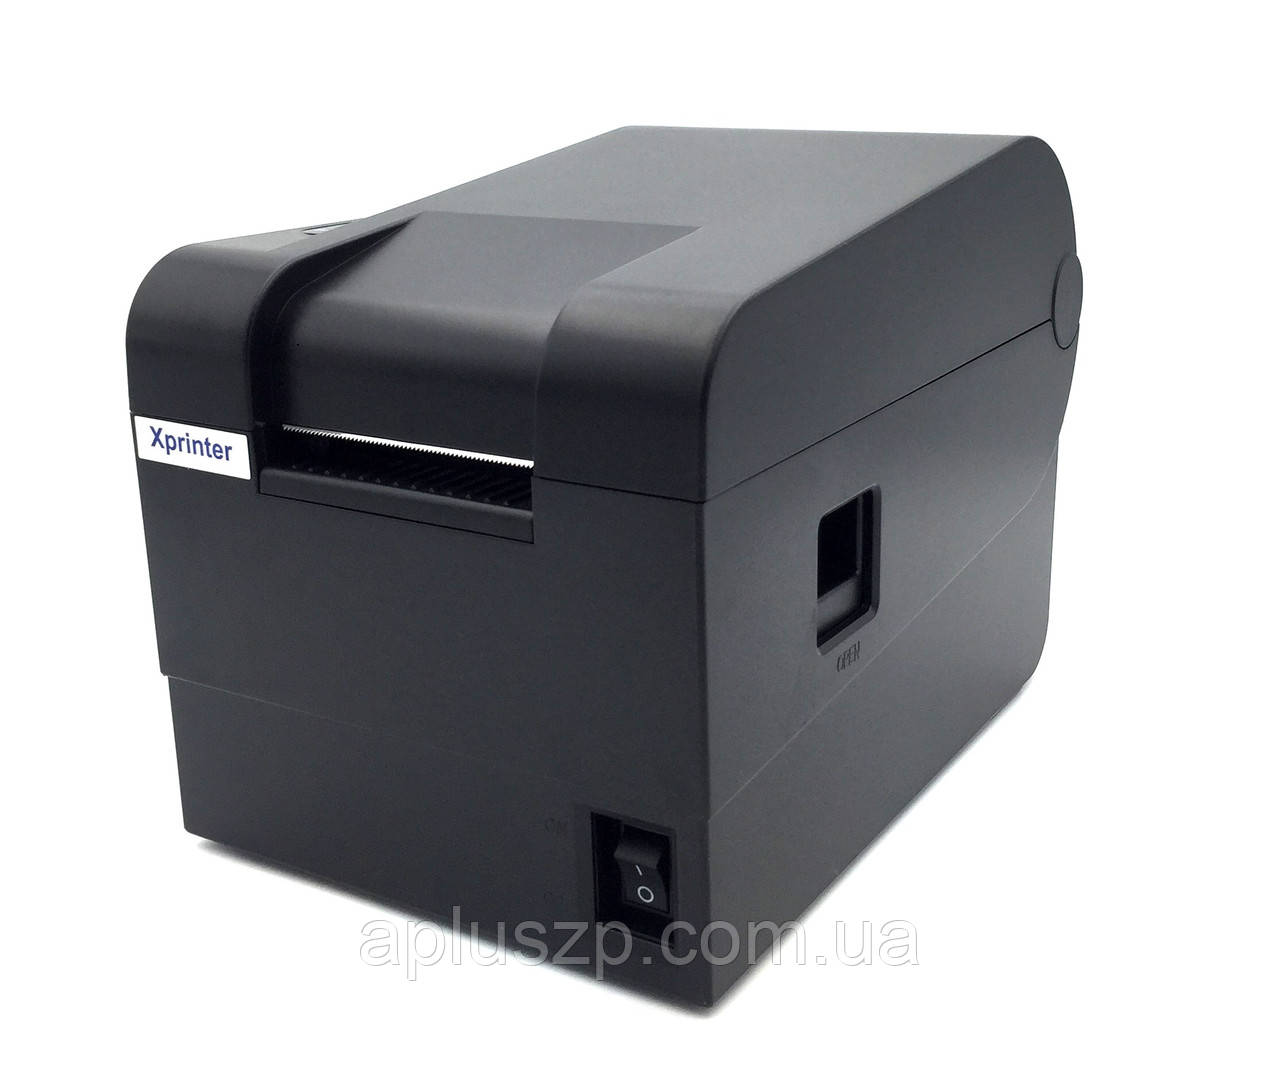 Термопринтеры xprinter купить. Принтер этикеток Xprinter XP 235b. Xprinter XP-235b. Xprinter упаковка. Bartender Special Edition Ultralite for Xprinter.